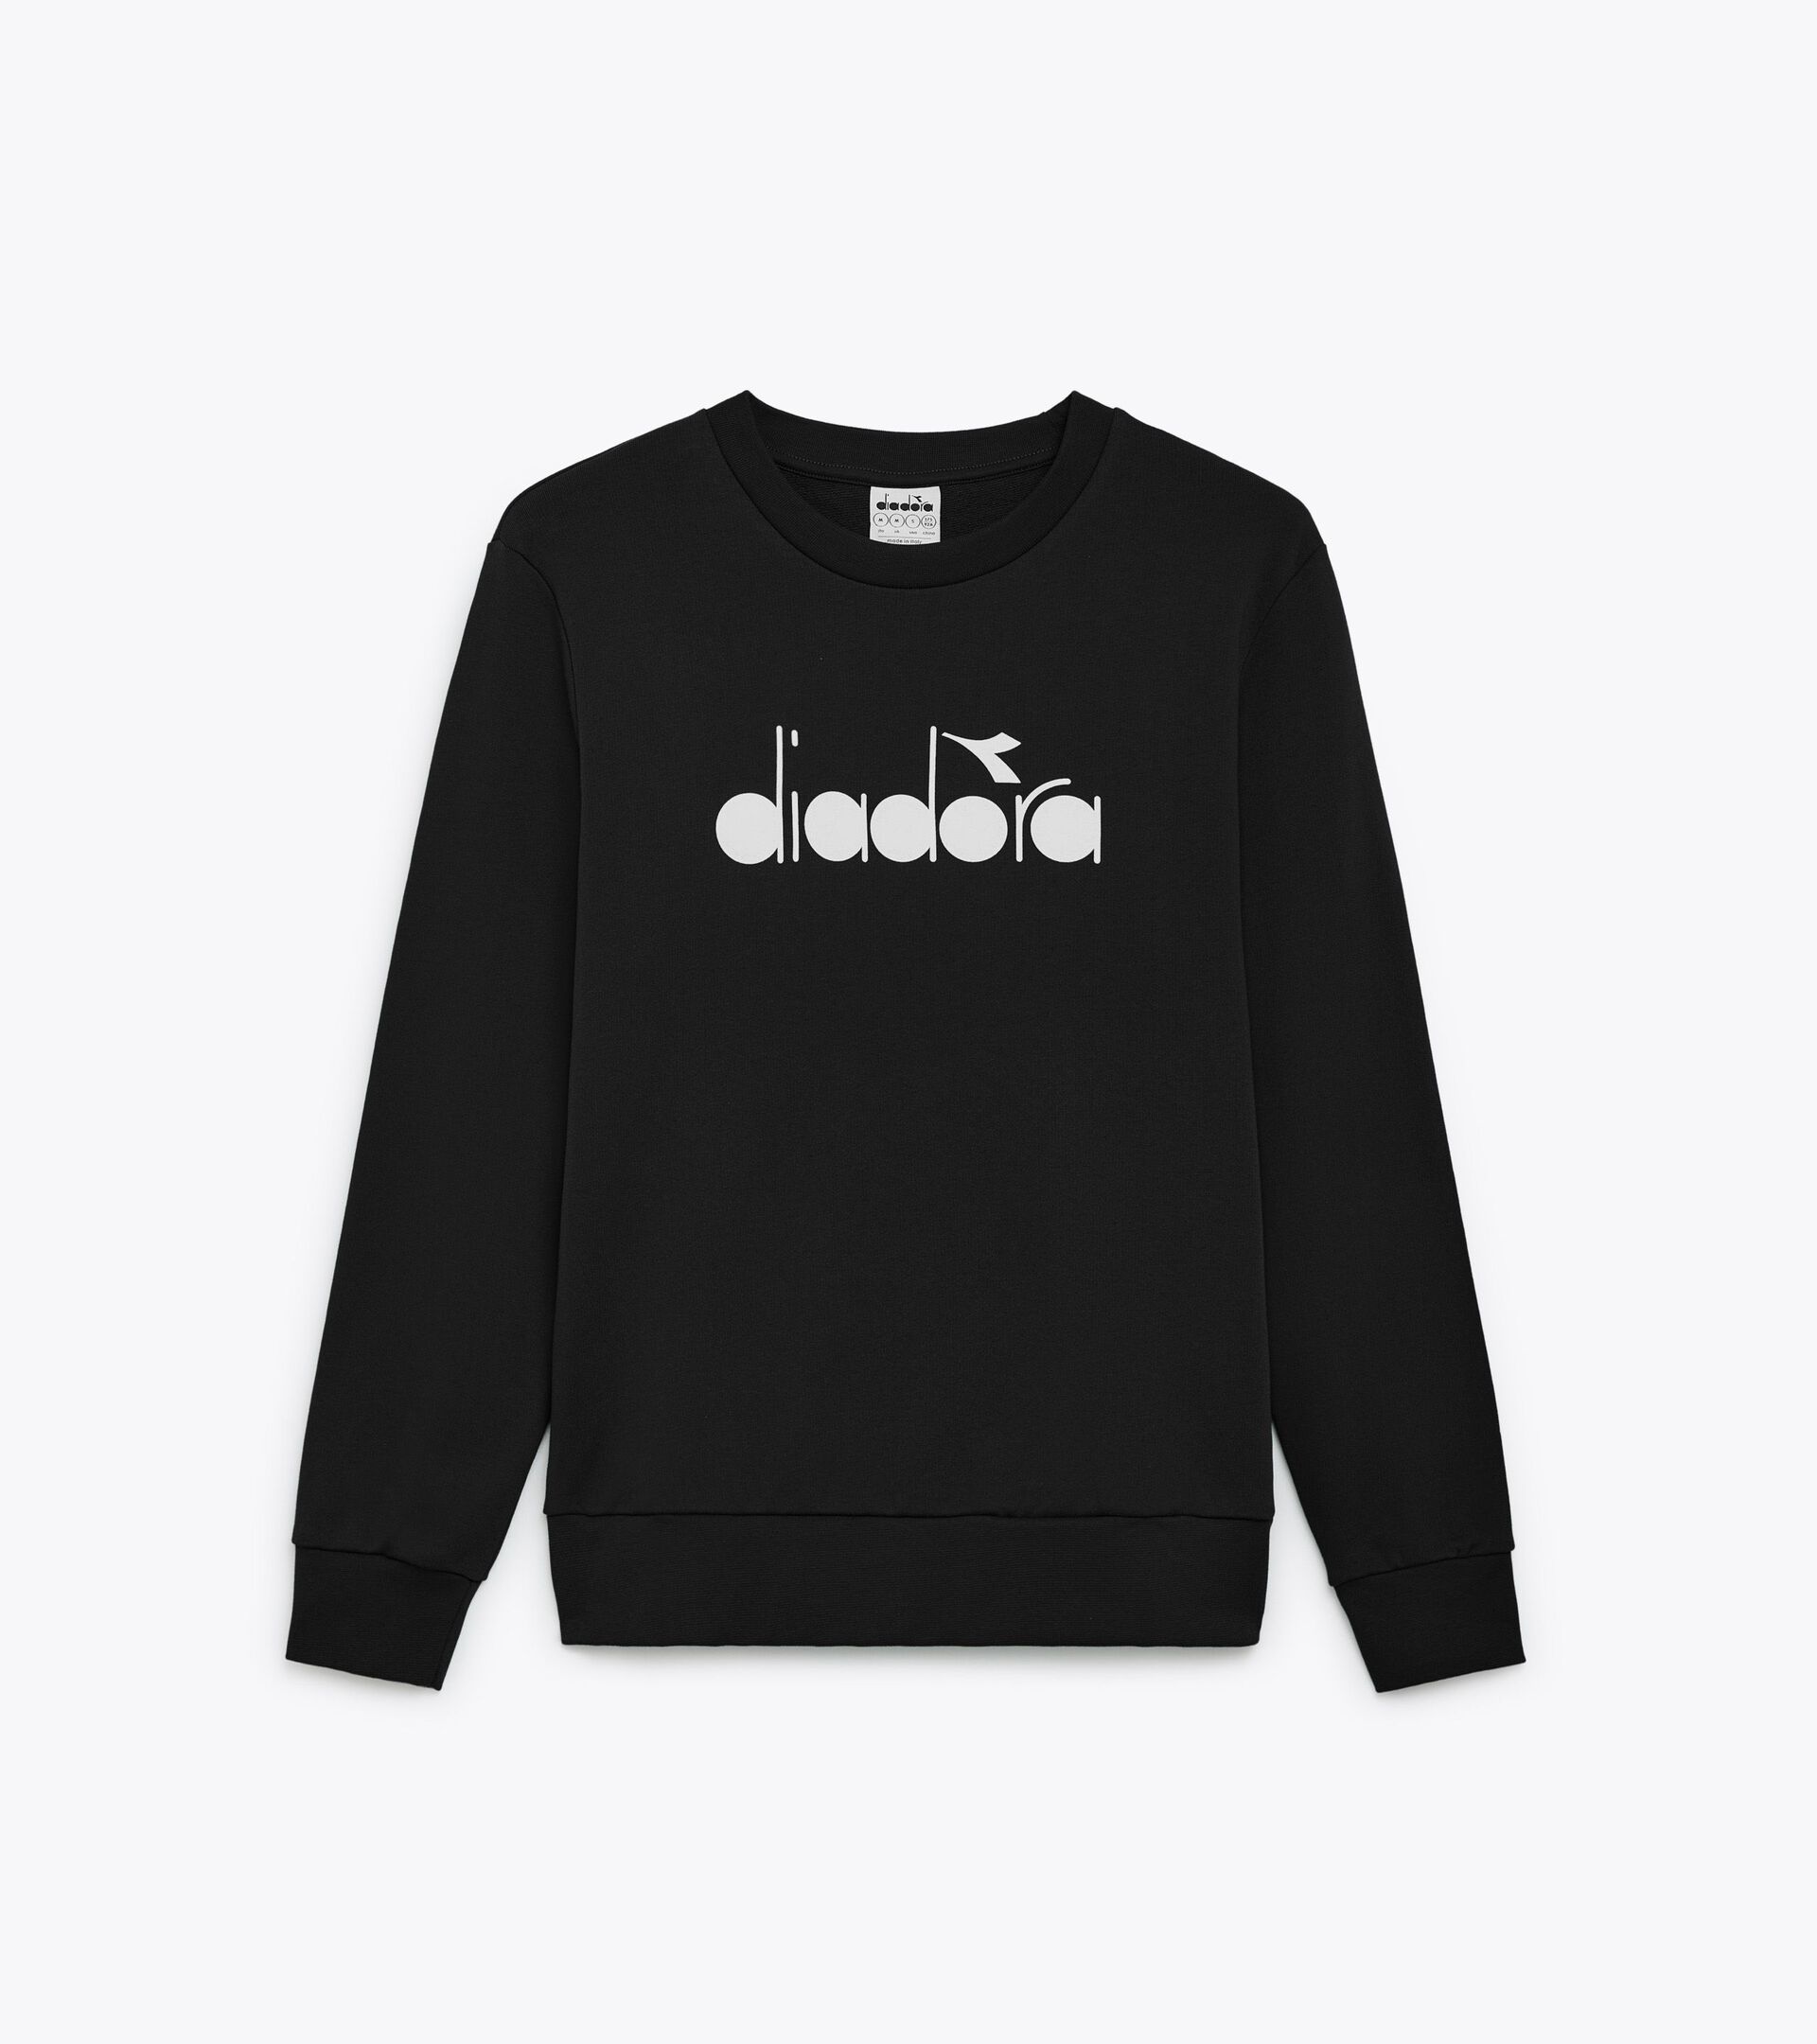 Sweatshirt - Made in Italy - Gender Neutral SWEATSHIRT CREW LOGO BLACK - Diadora